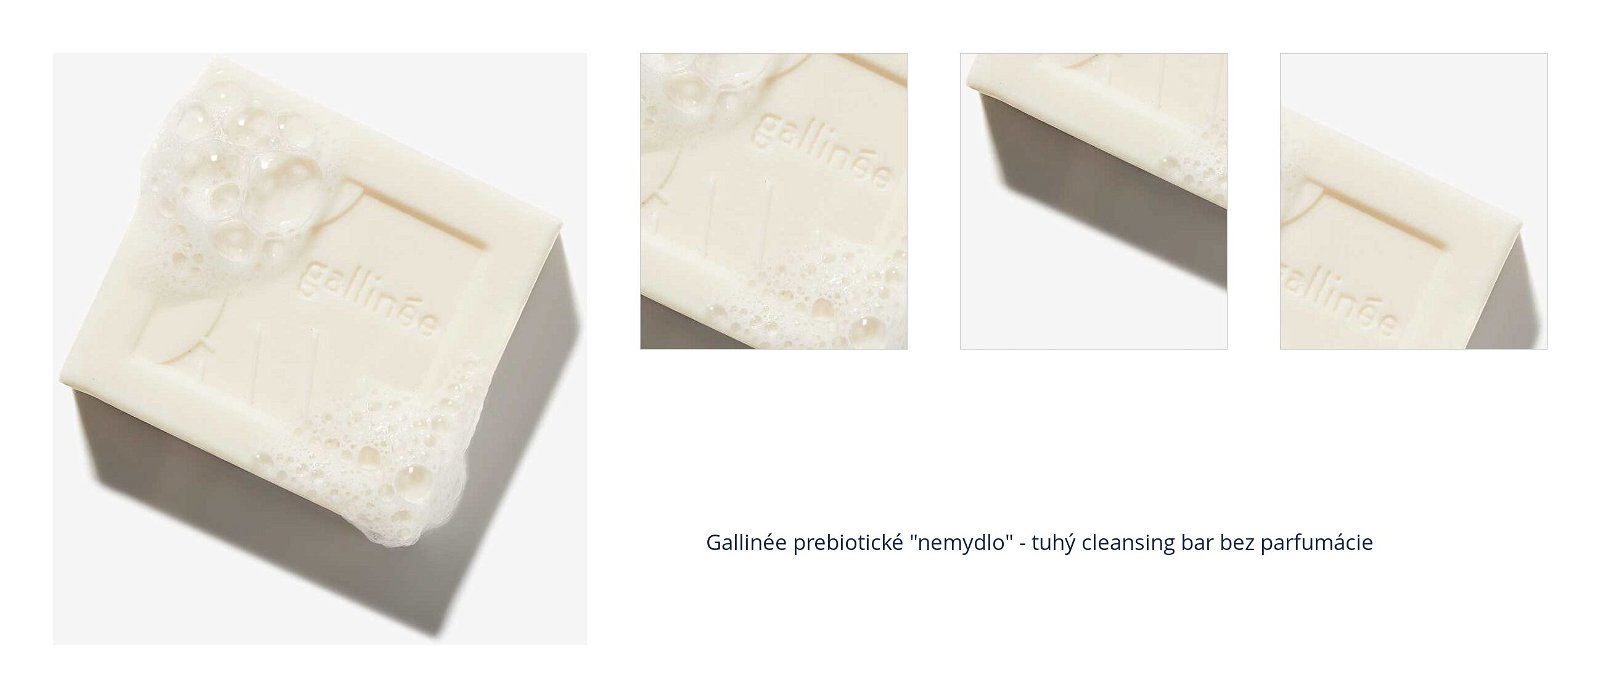 Gallinée prebiotické "nemydlo" - tuhý cleansing bar bez parfumácie 1